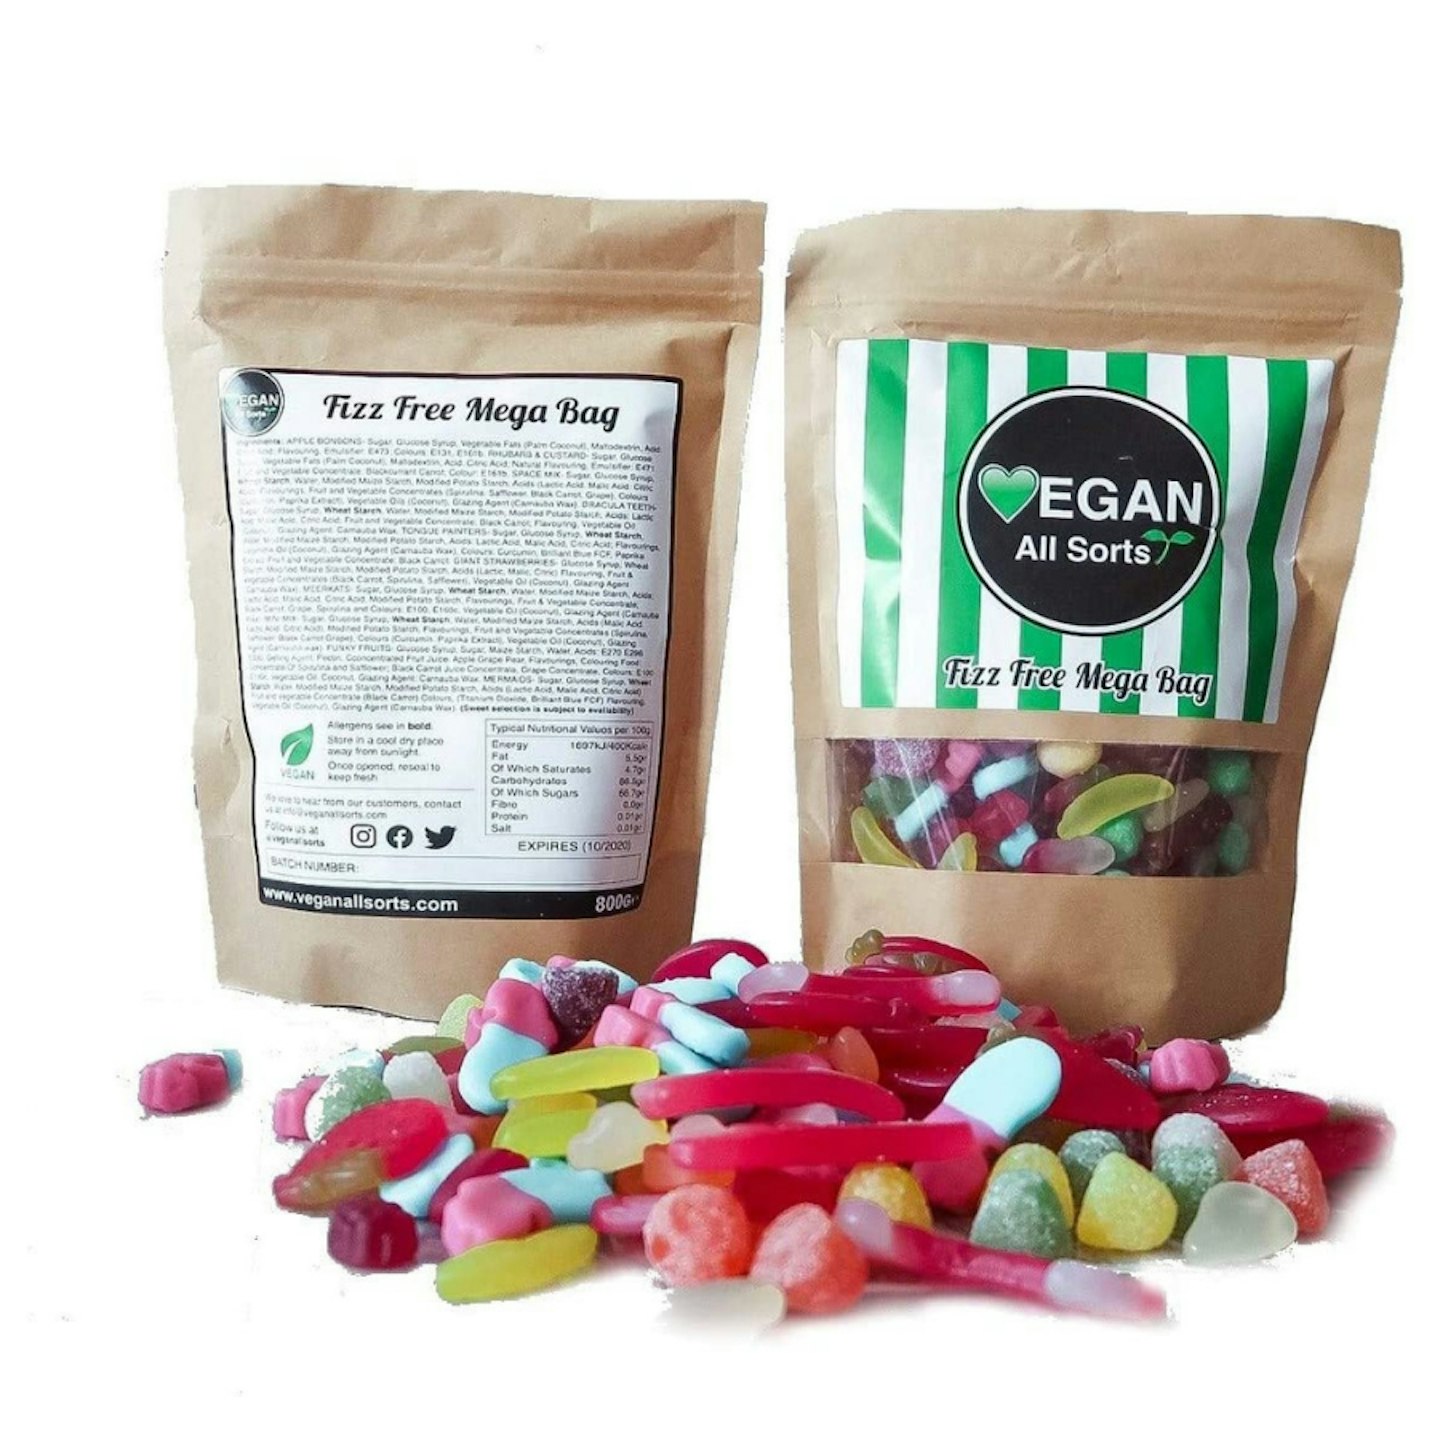 Vegan All Sorts Mega Mix Bag of Vegan Sweets